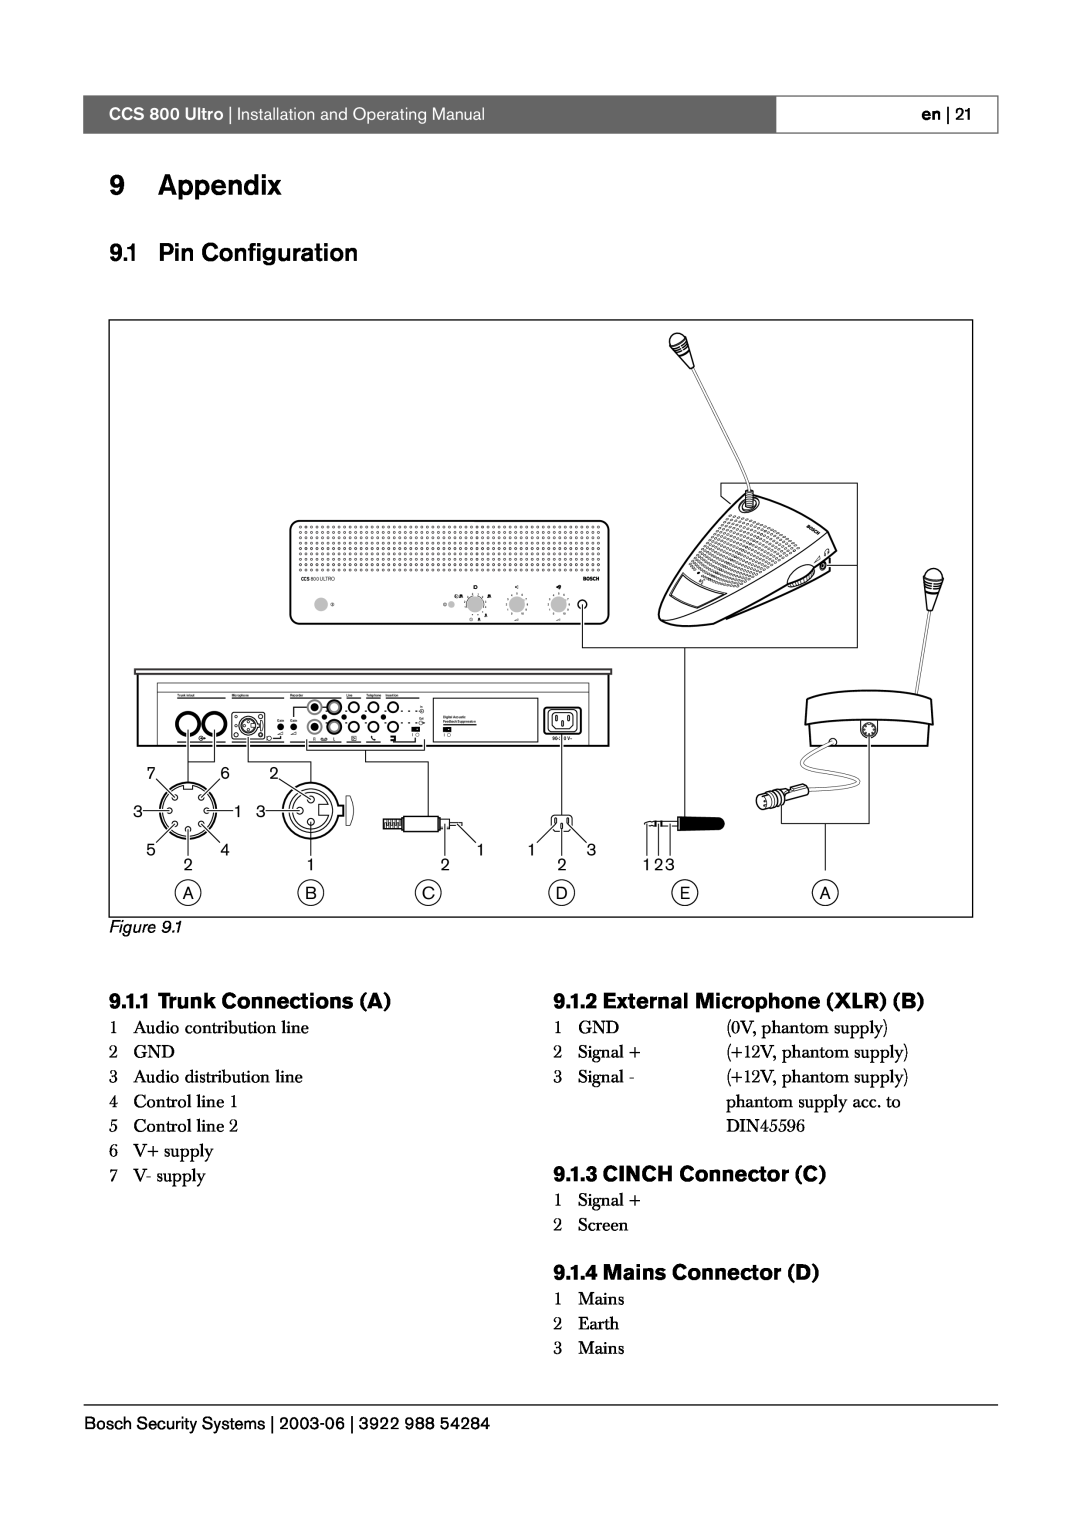 Bosch Appliances CCS 800 Ultro manual 9Appendix, Trunk Connections A, External Microphone XLR B, CINCH Connector C 